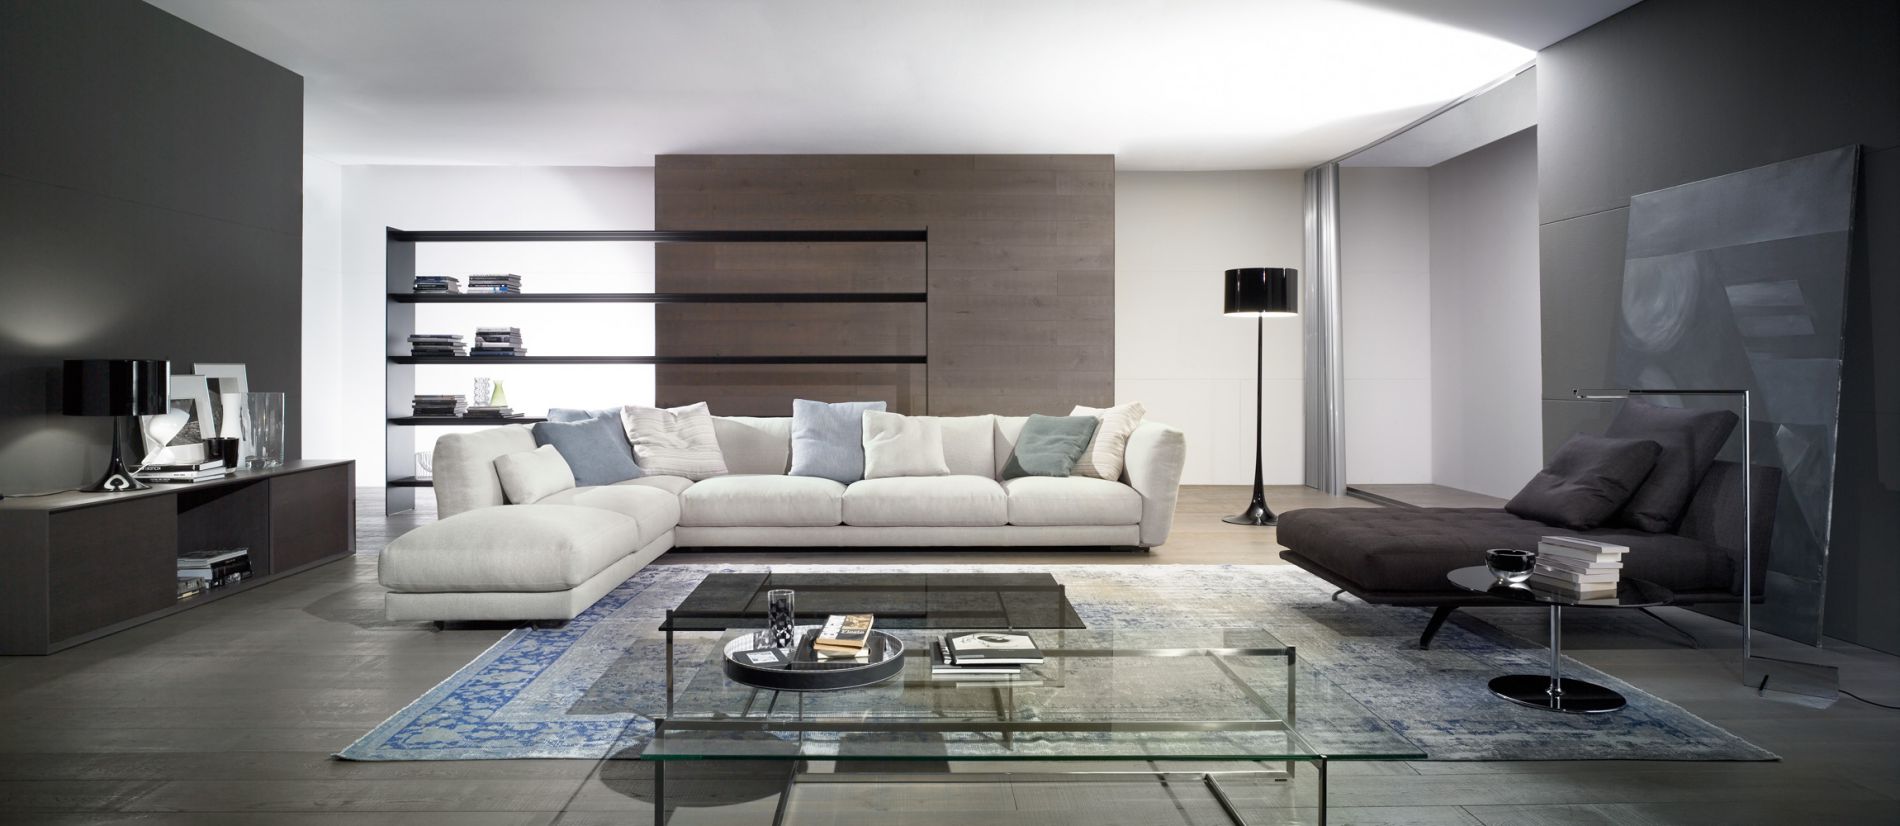 Barcelona Design мебель. Halle torno Sofa by form us.